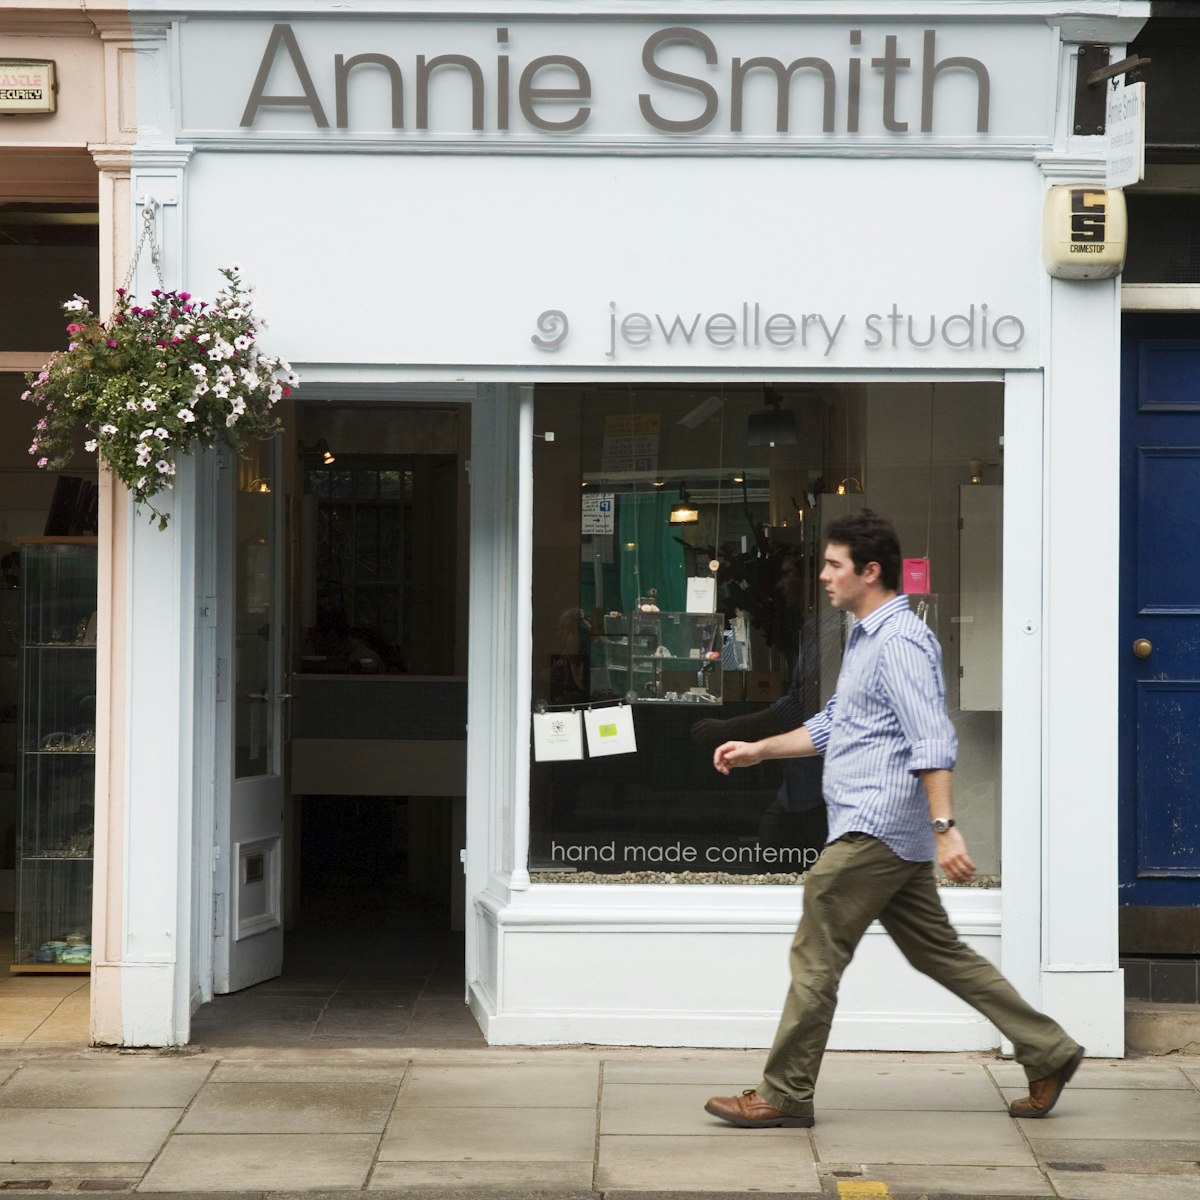 Annie Smith jewellery studio on Raeburn Place, Stockbridge.